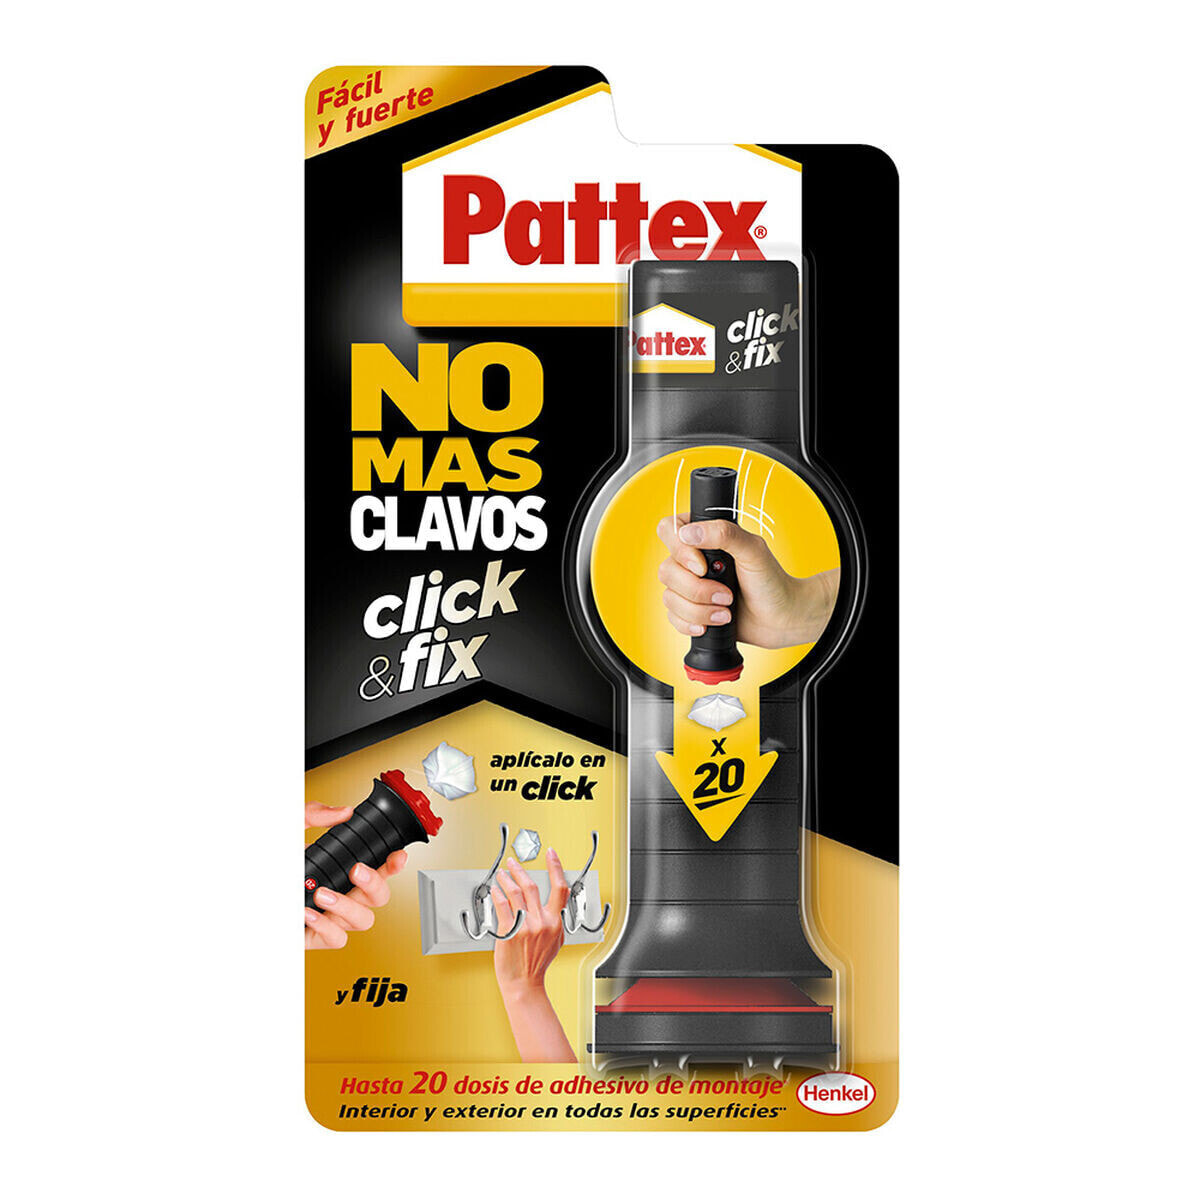 Instant Adhesive Pattex click & fix 30 g White Paste